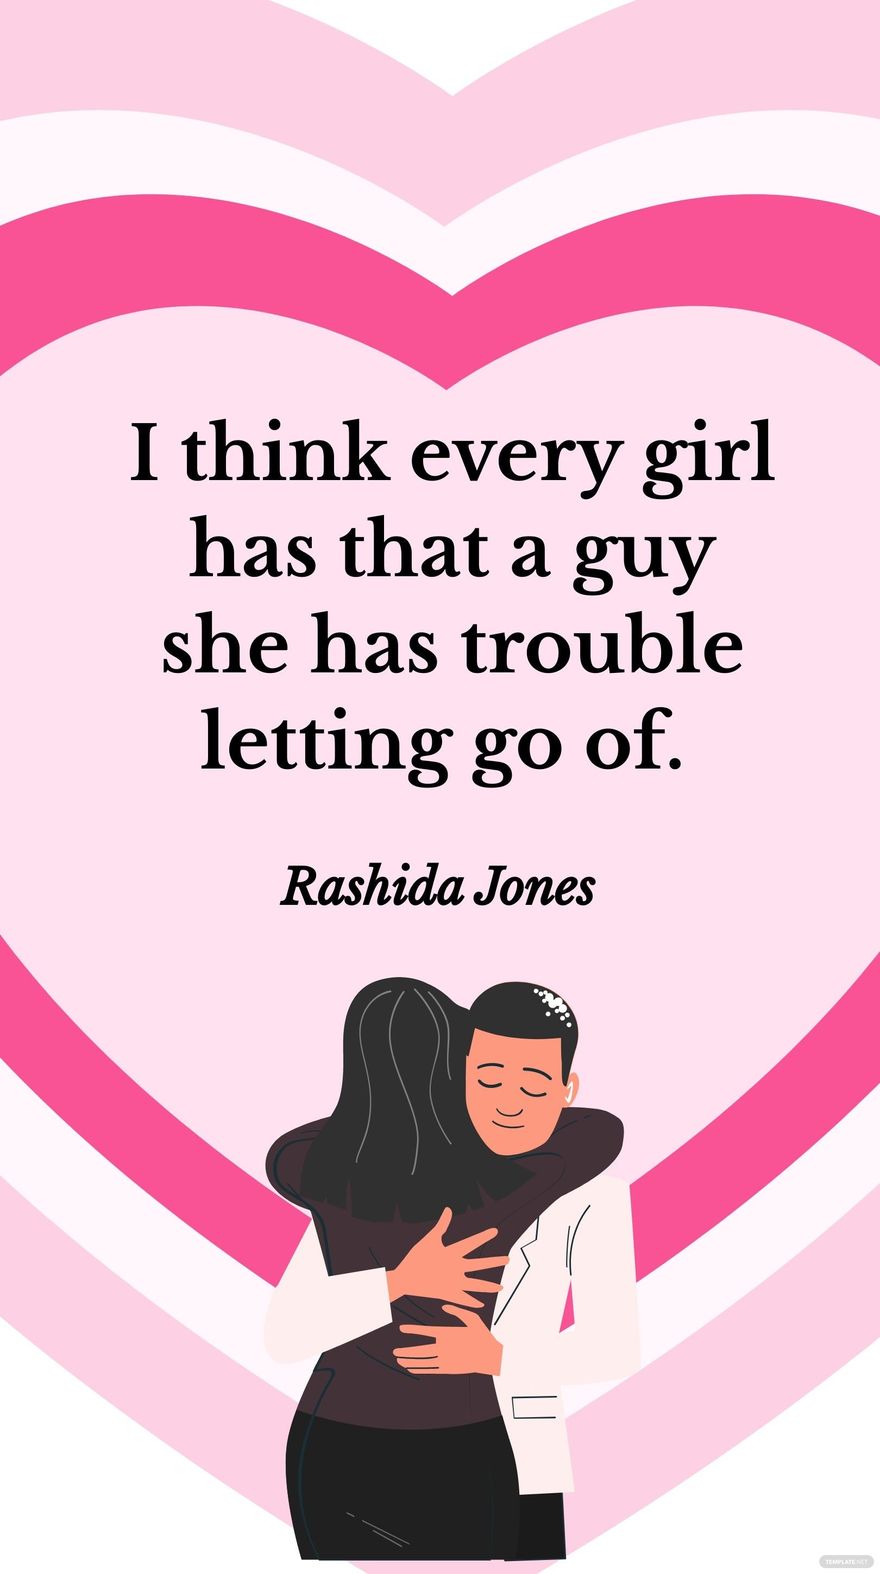 Rashida Jones - I think every girl has that a guy she has trouble letting go of.